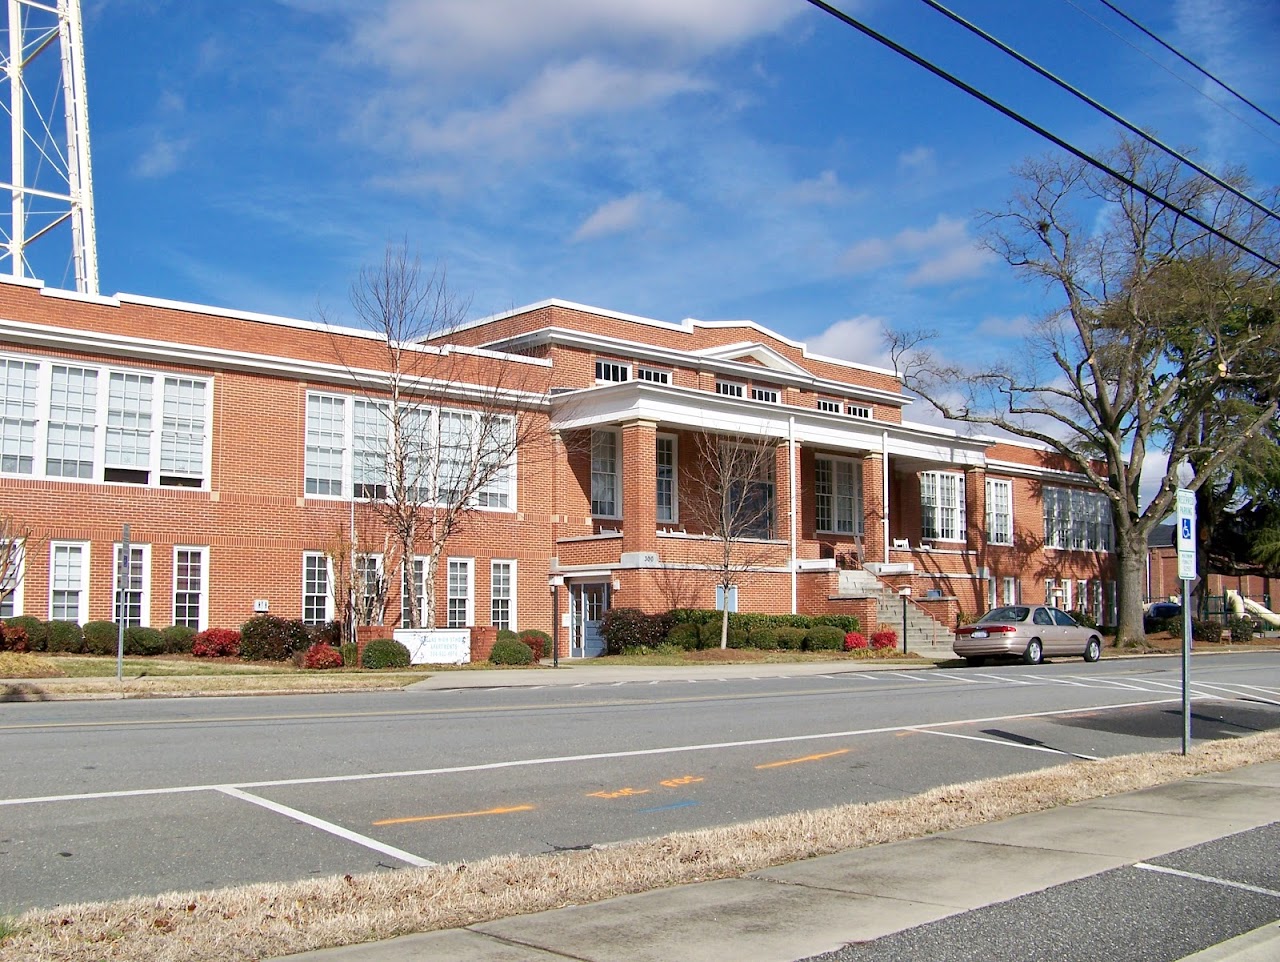 Photo of DALLAS HIGH SCHOOL APTS at 300 WEST CHURCH STREET DALLAS, NC 28034